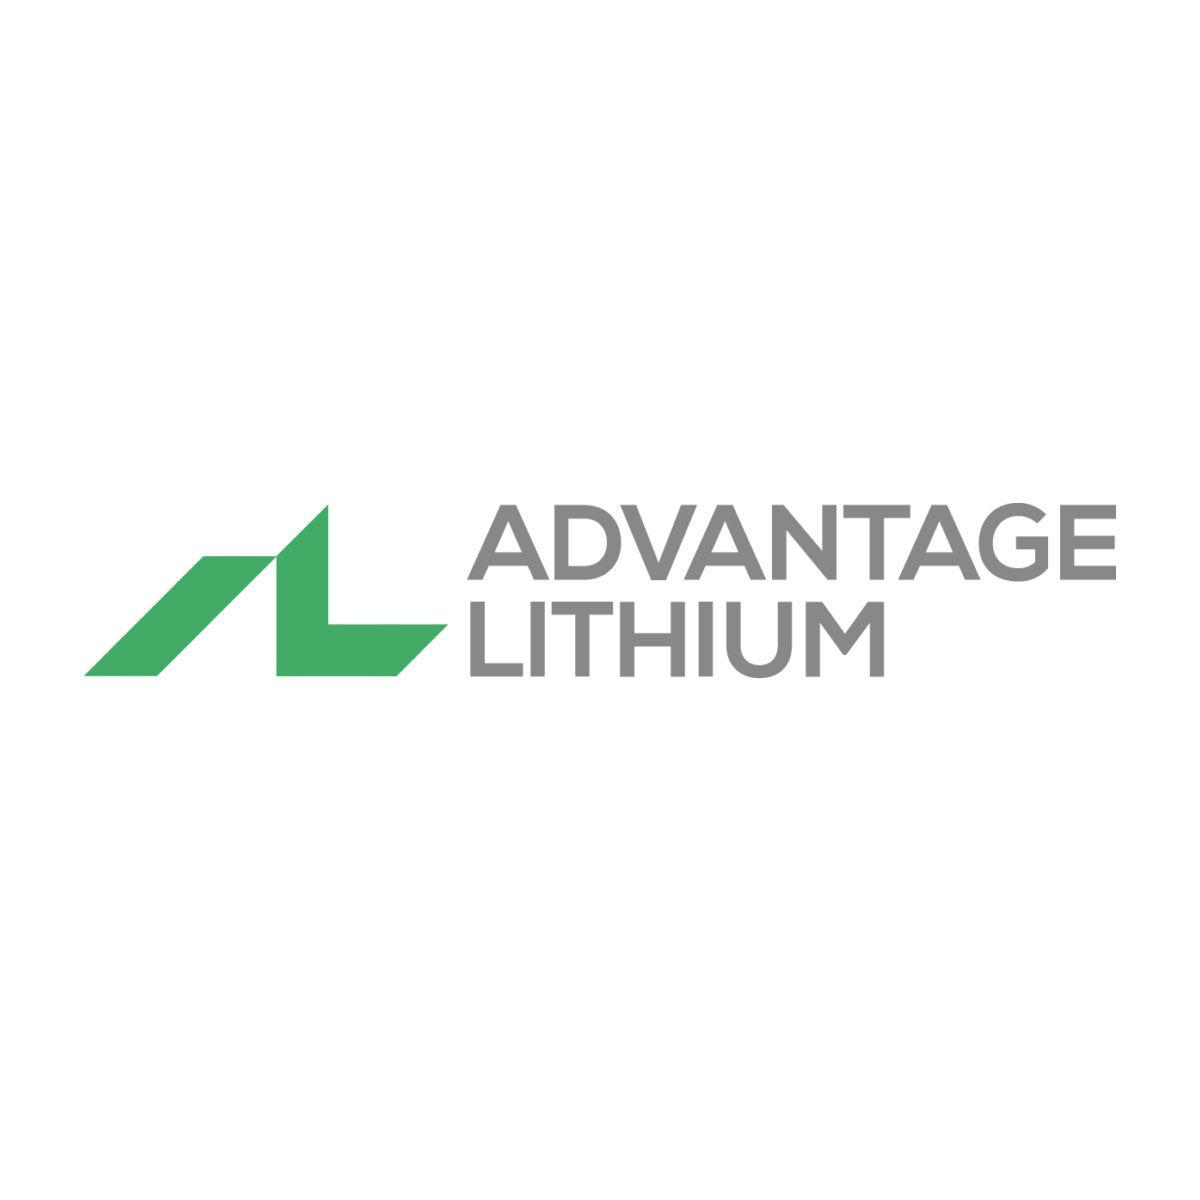 Lithium Logo - Advantage Lithium